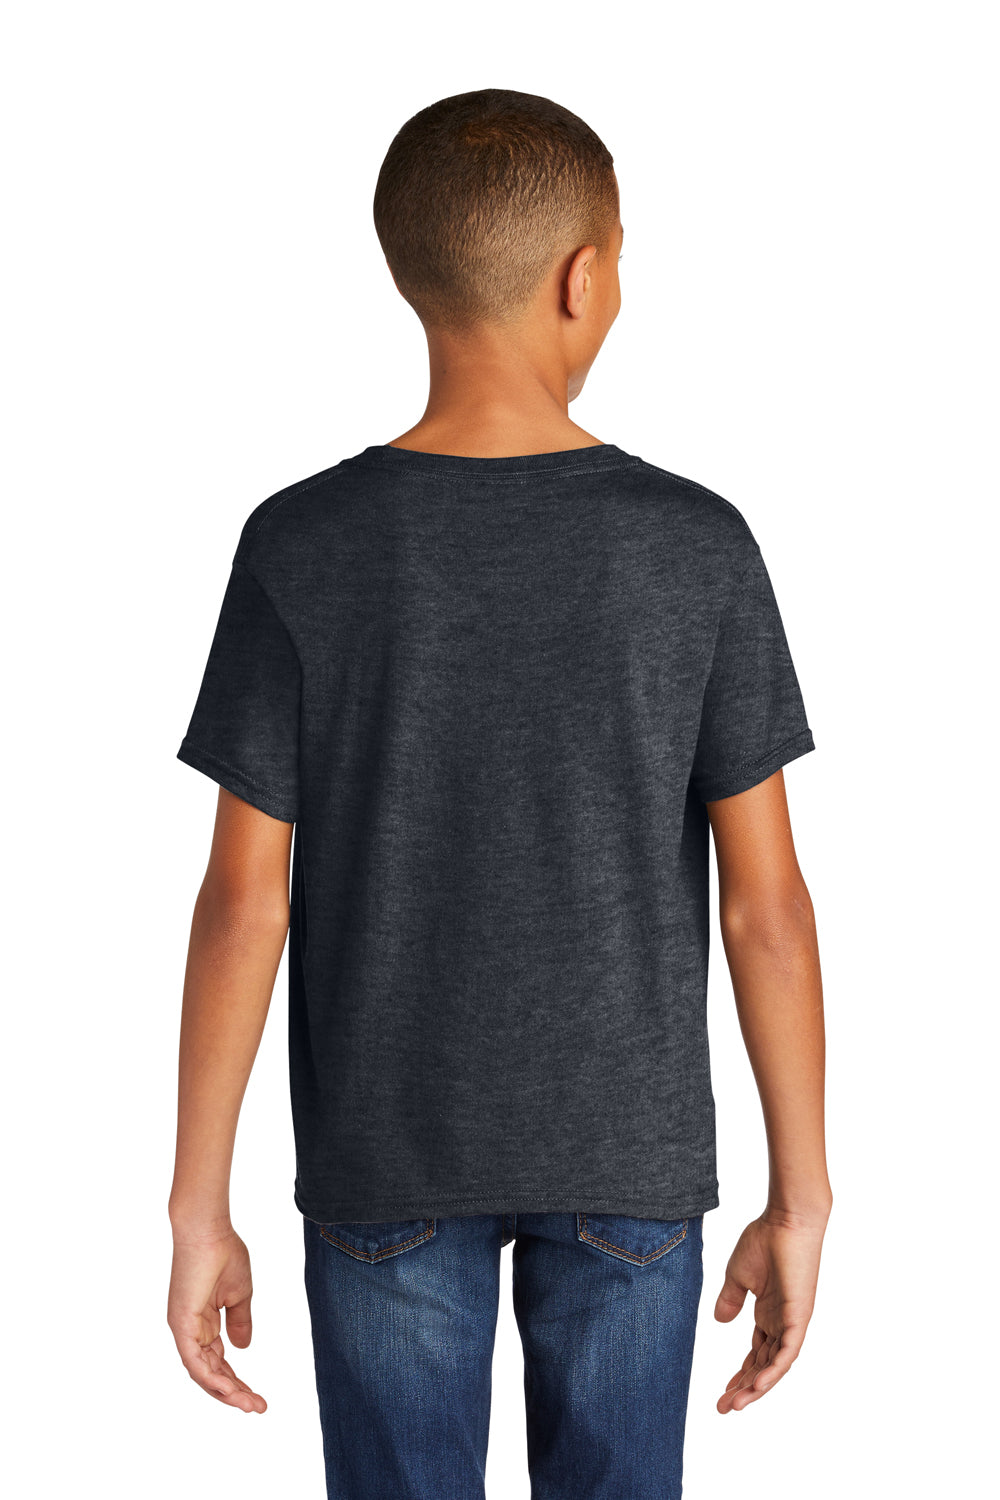 Gildan Youth Softstyle Short Sleeve Crewneck T-Shirt Heather Dark Grey Back